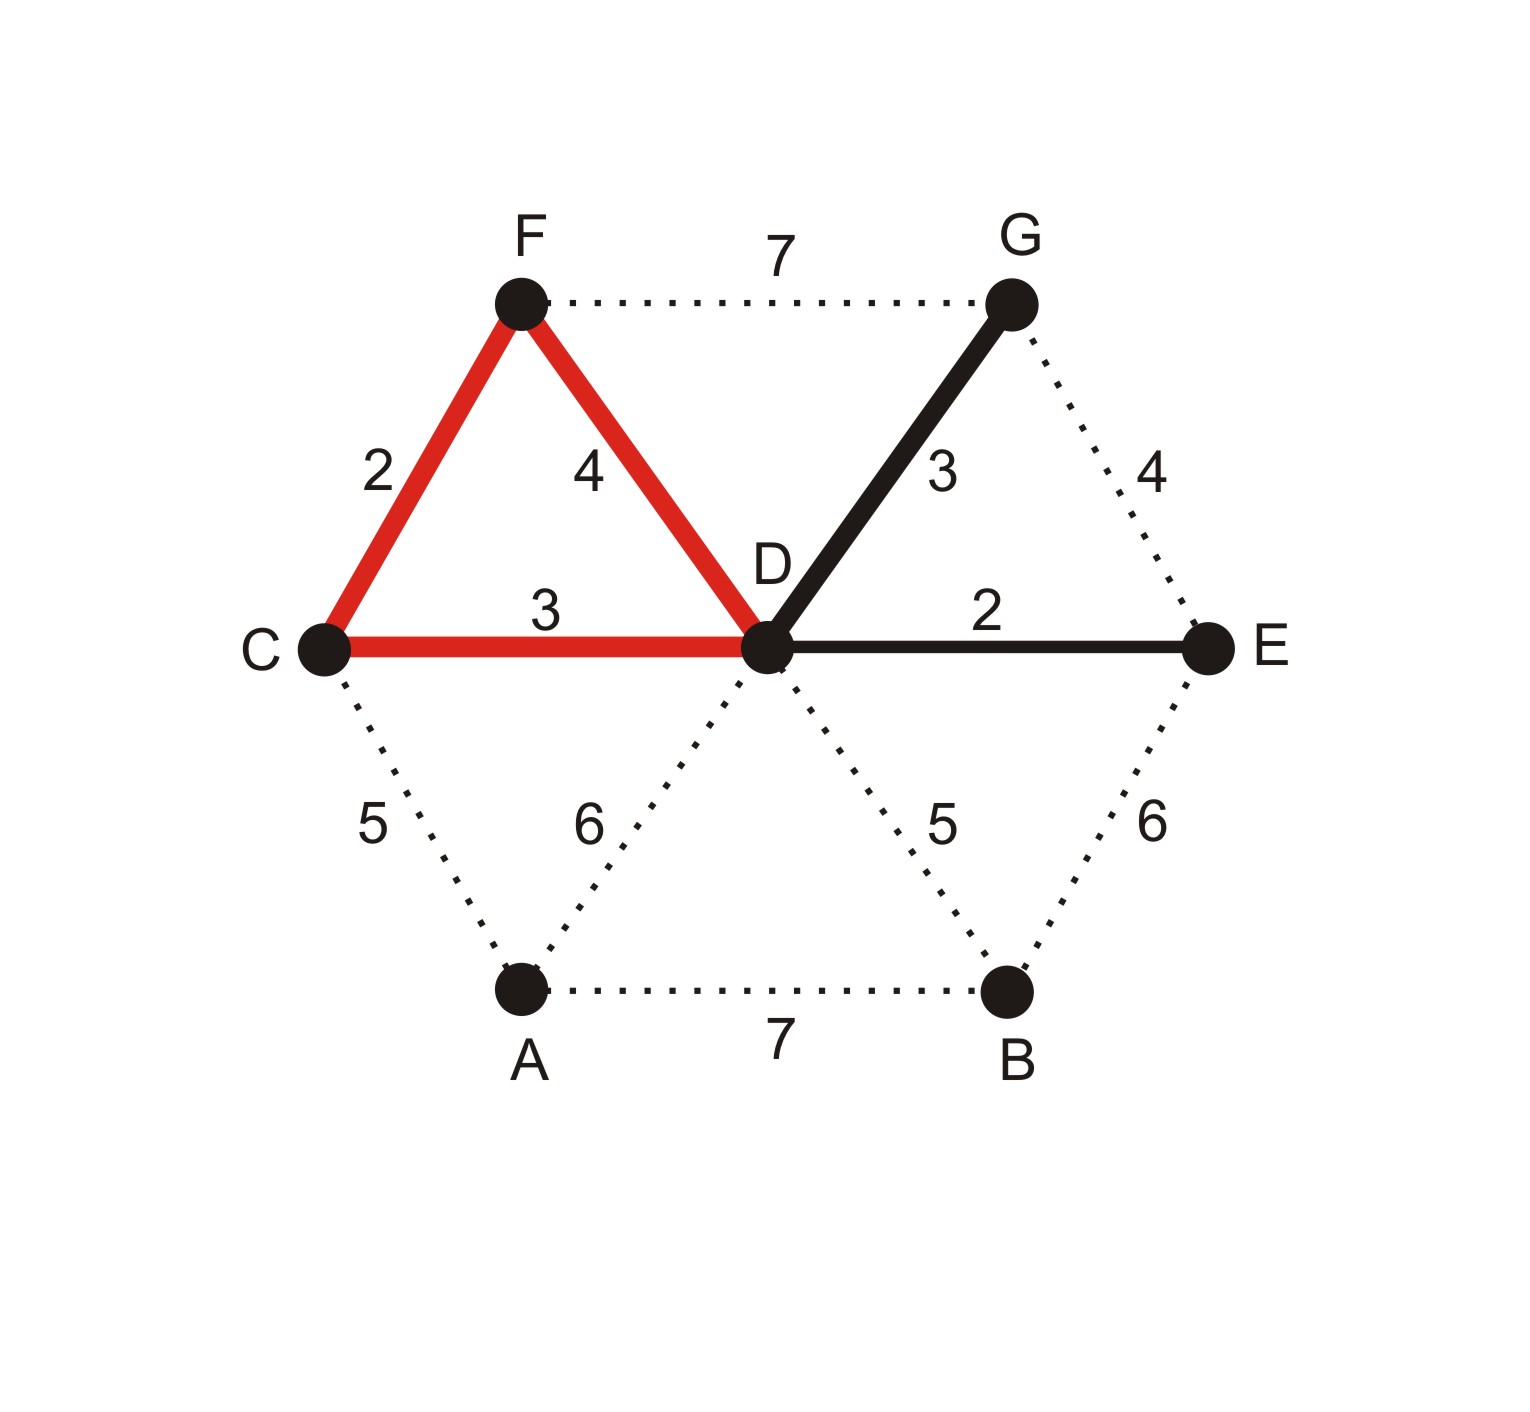 Adaptation of Mathematical ALGorithms: Kruskal's algorithm